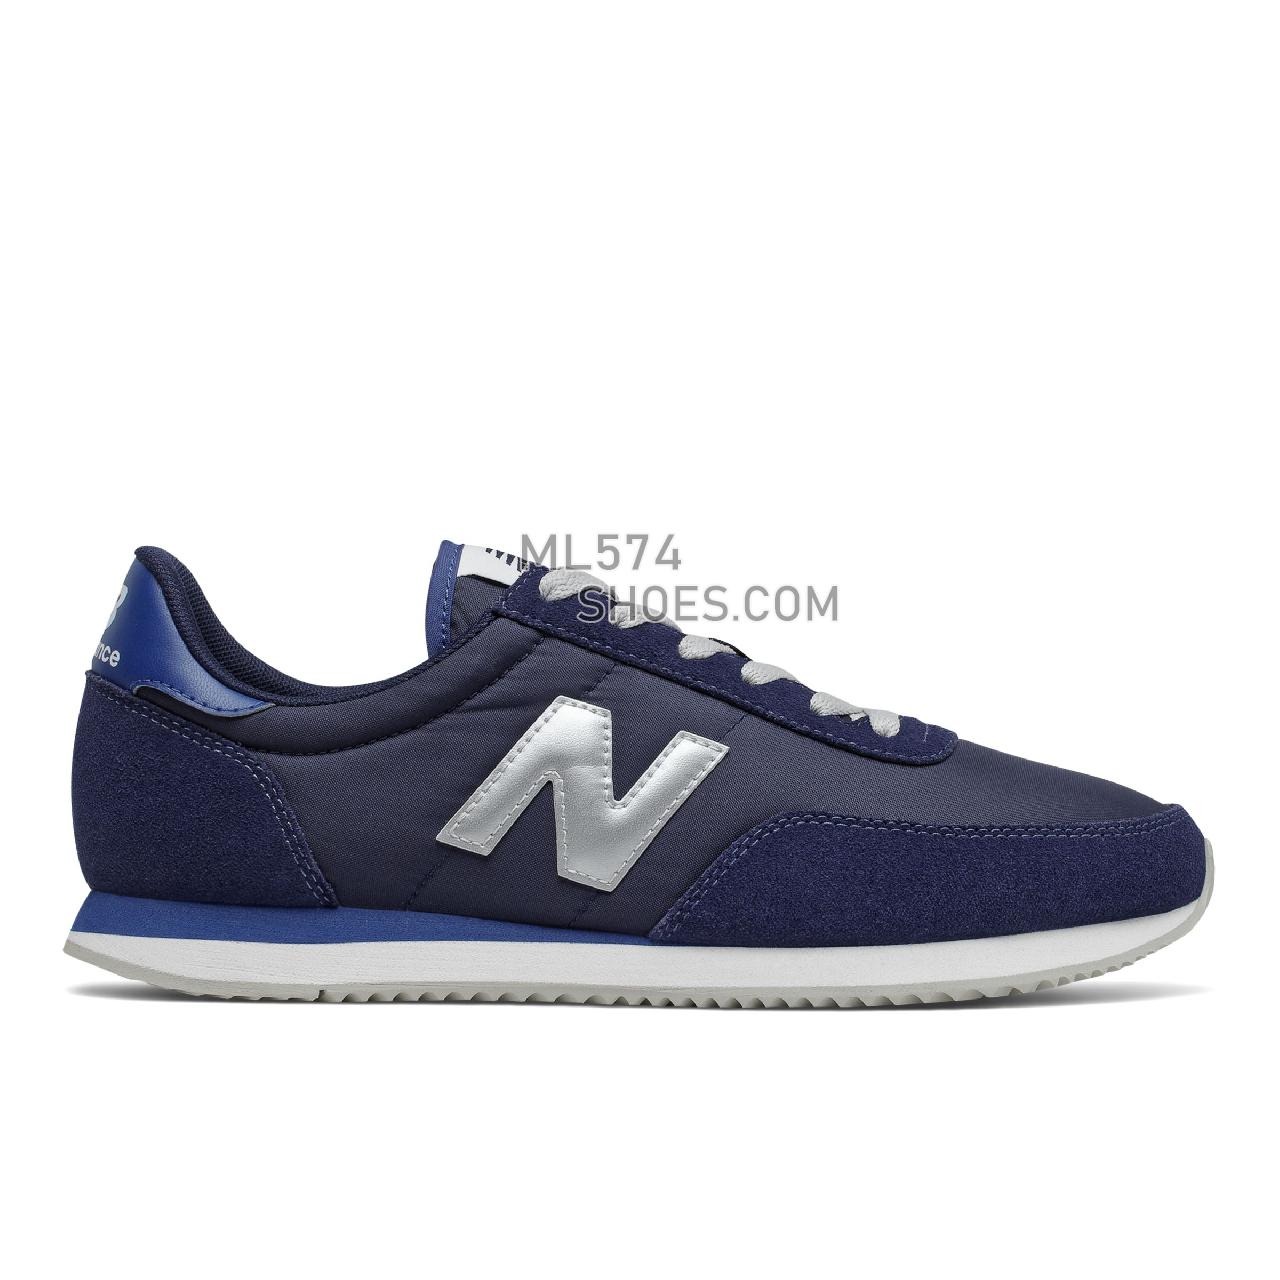 New Balance 720 - Unisex Men's Women's Classic Sneakers - Pigment with Captain Blue - UL720NE1